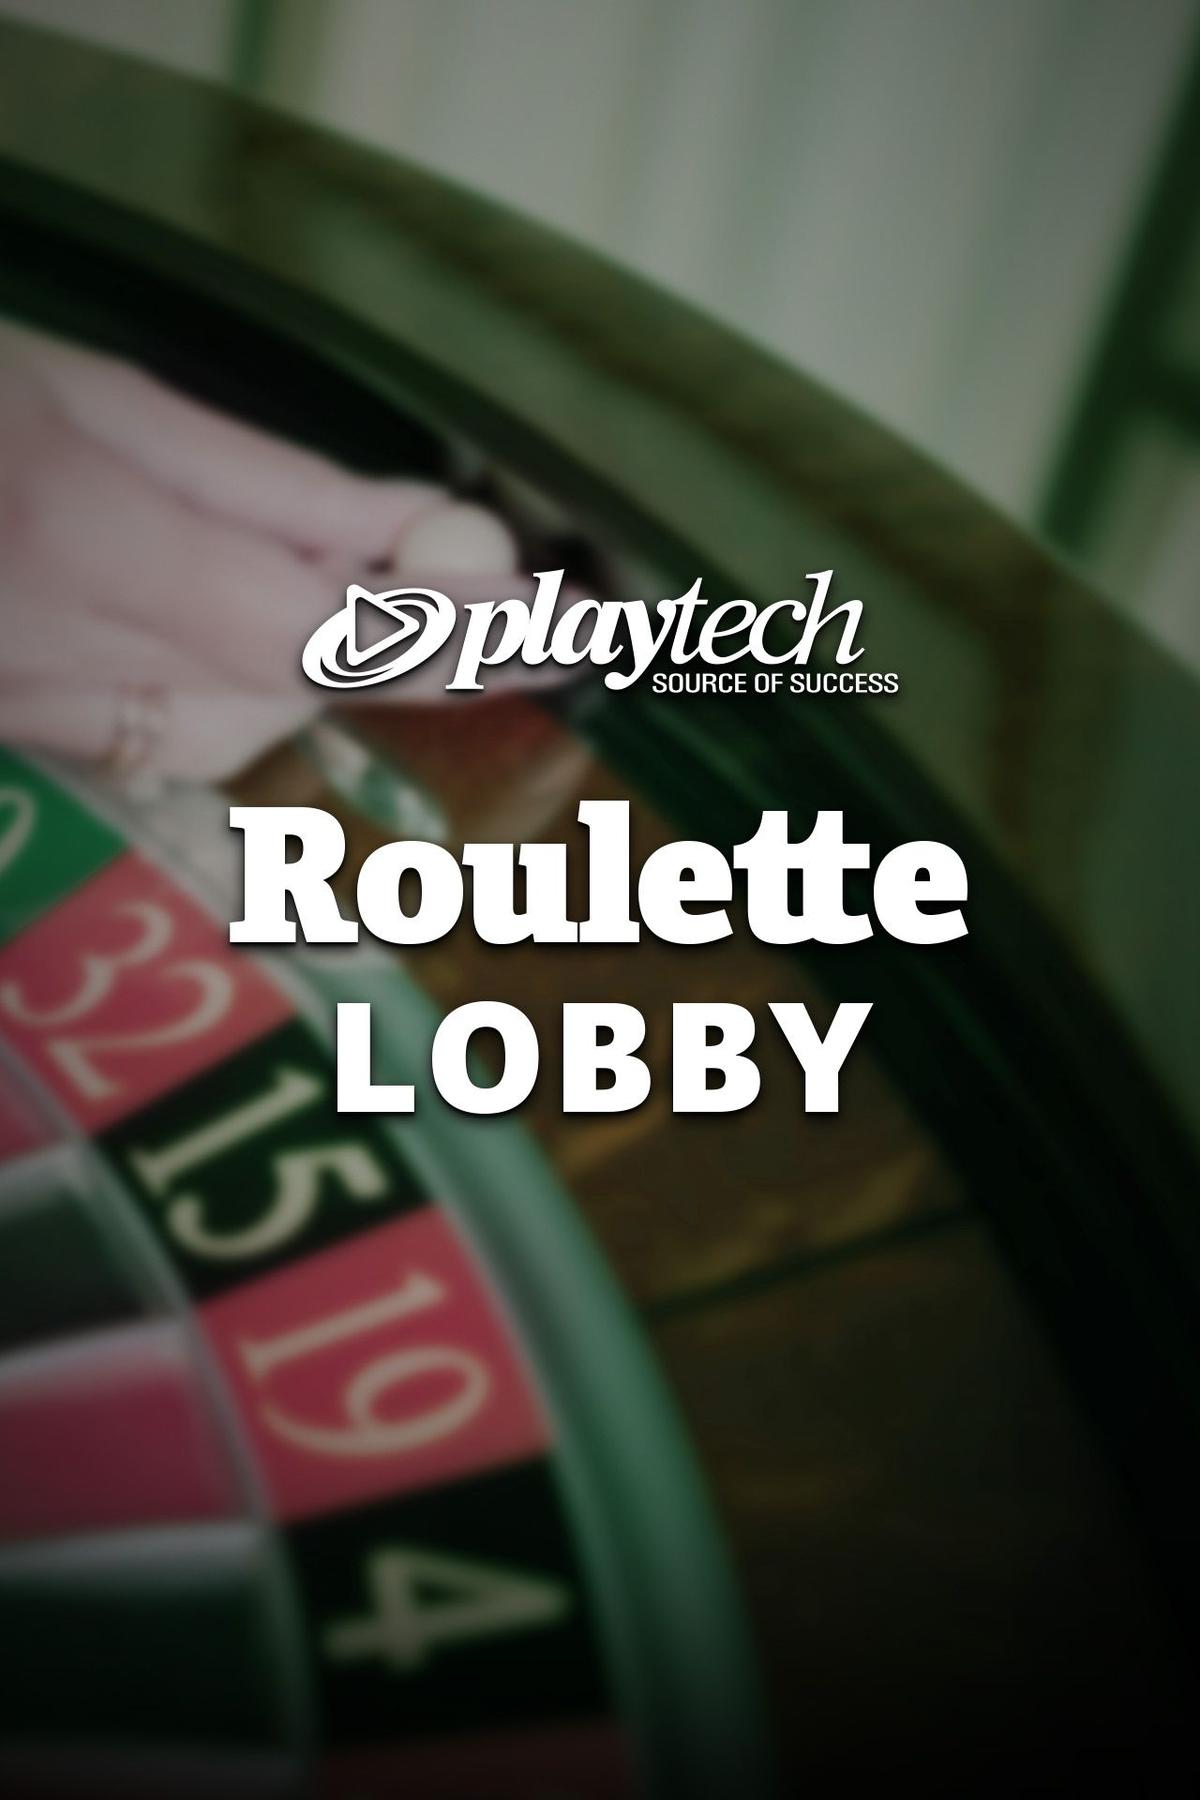 Roulette Lobby Playtech